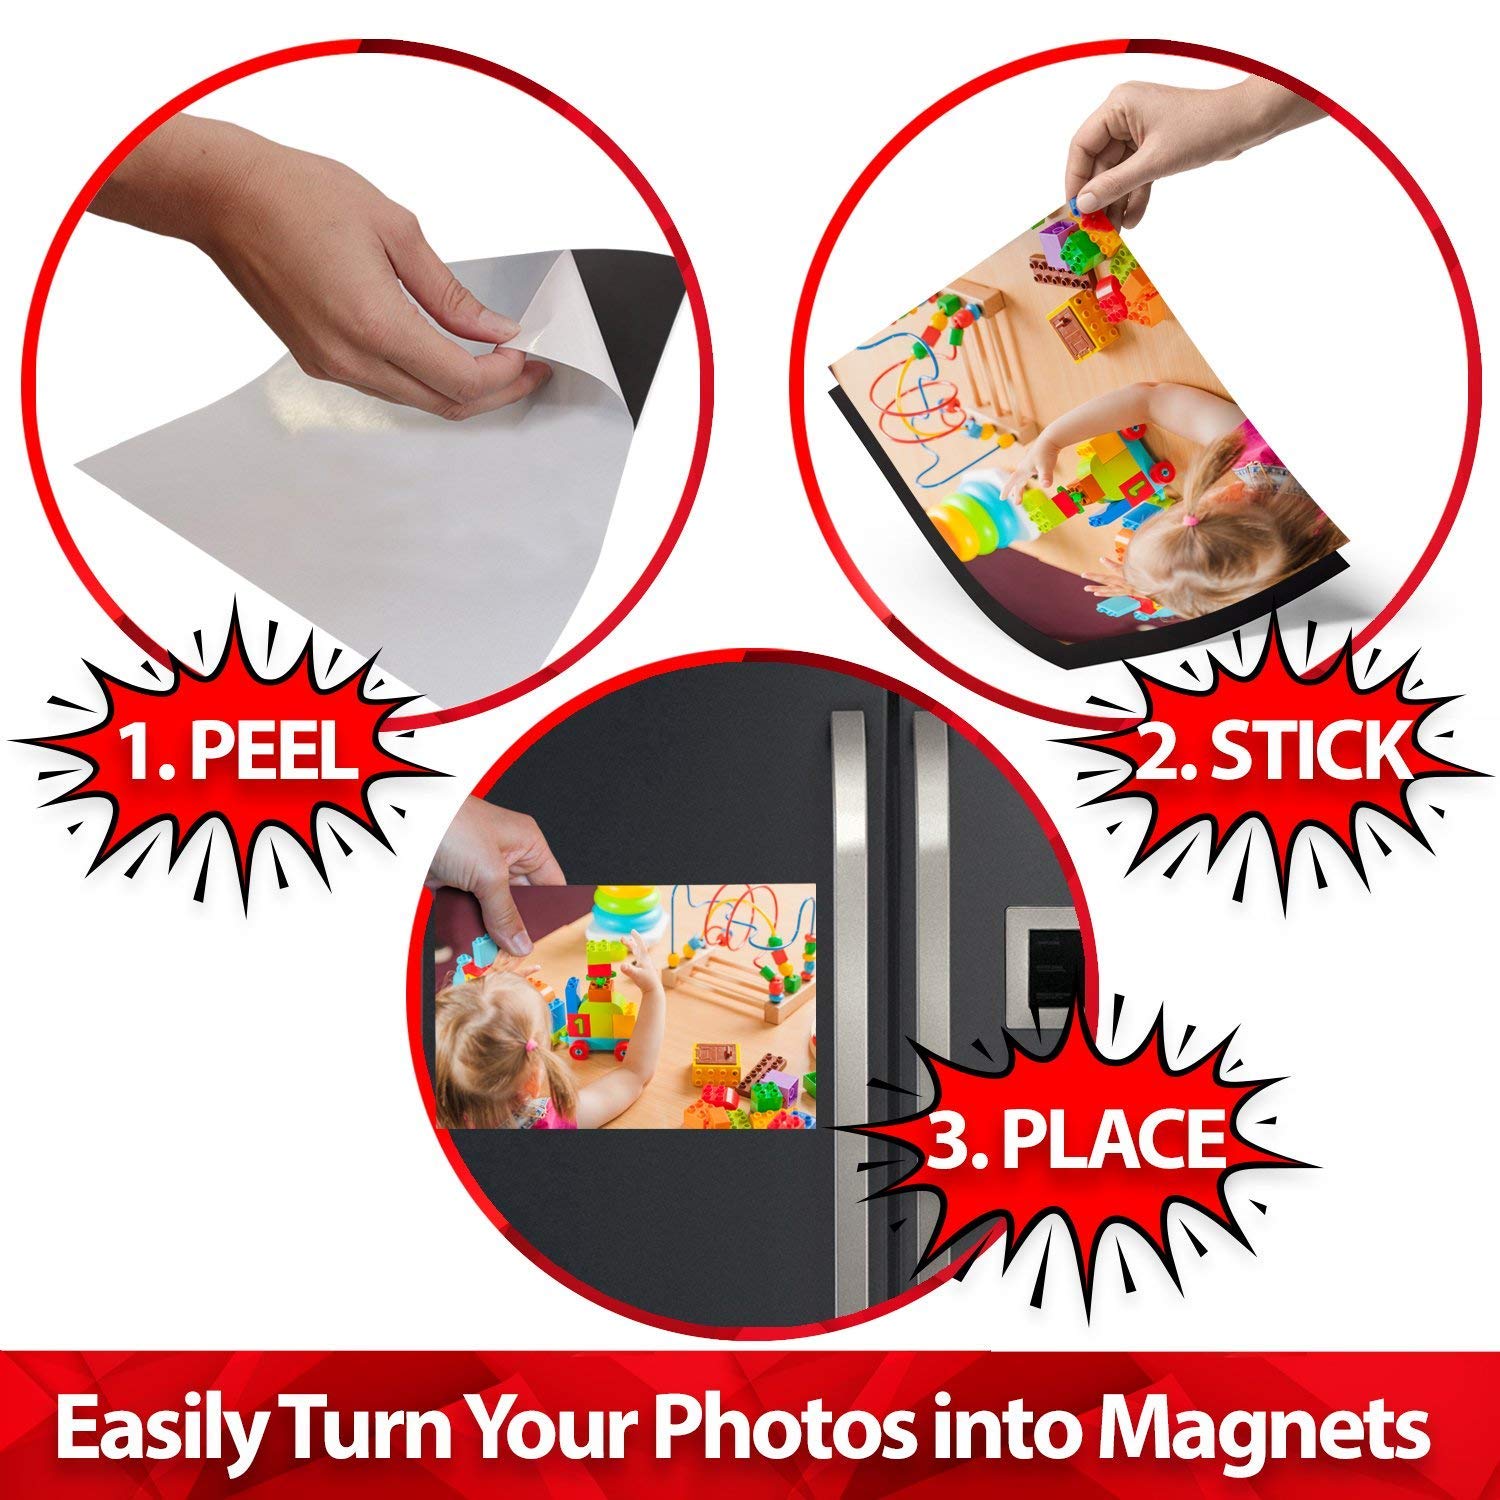 4 x 6 Glossy Magnet Sheet